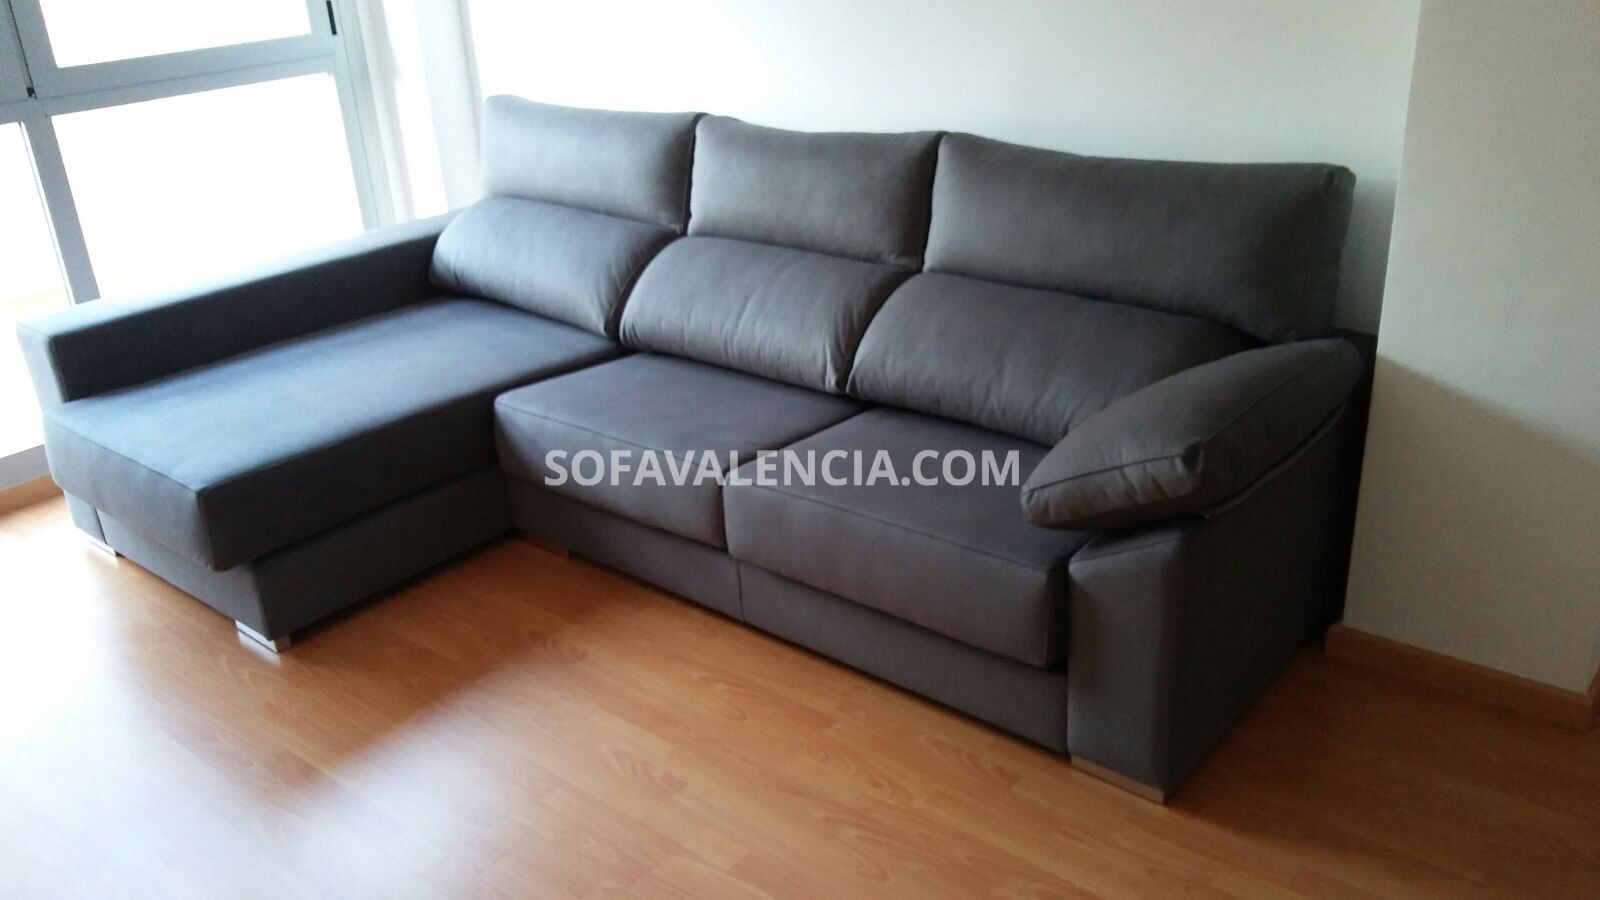 sofa-valencia-fotos-clientes-89